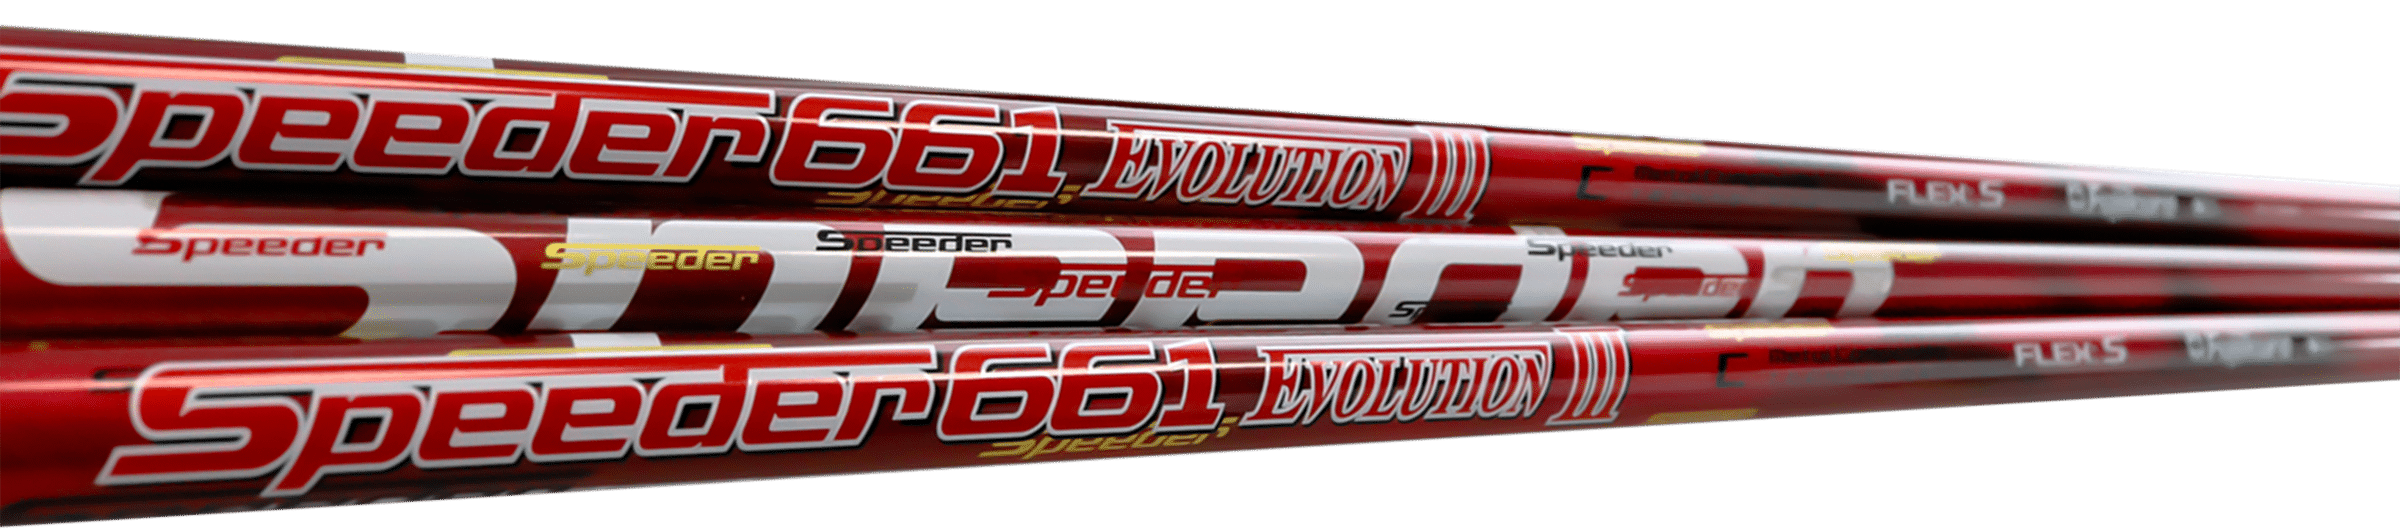 Speeder Evolution III | Fujikura Golf